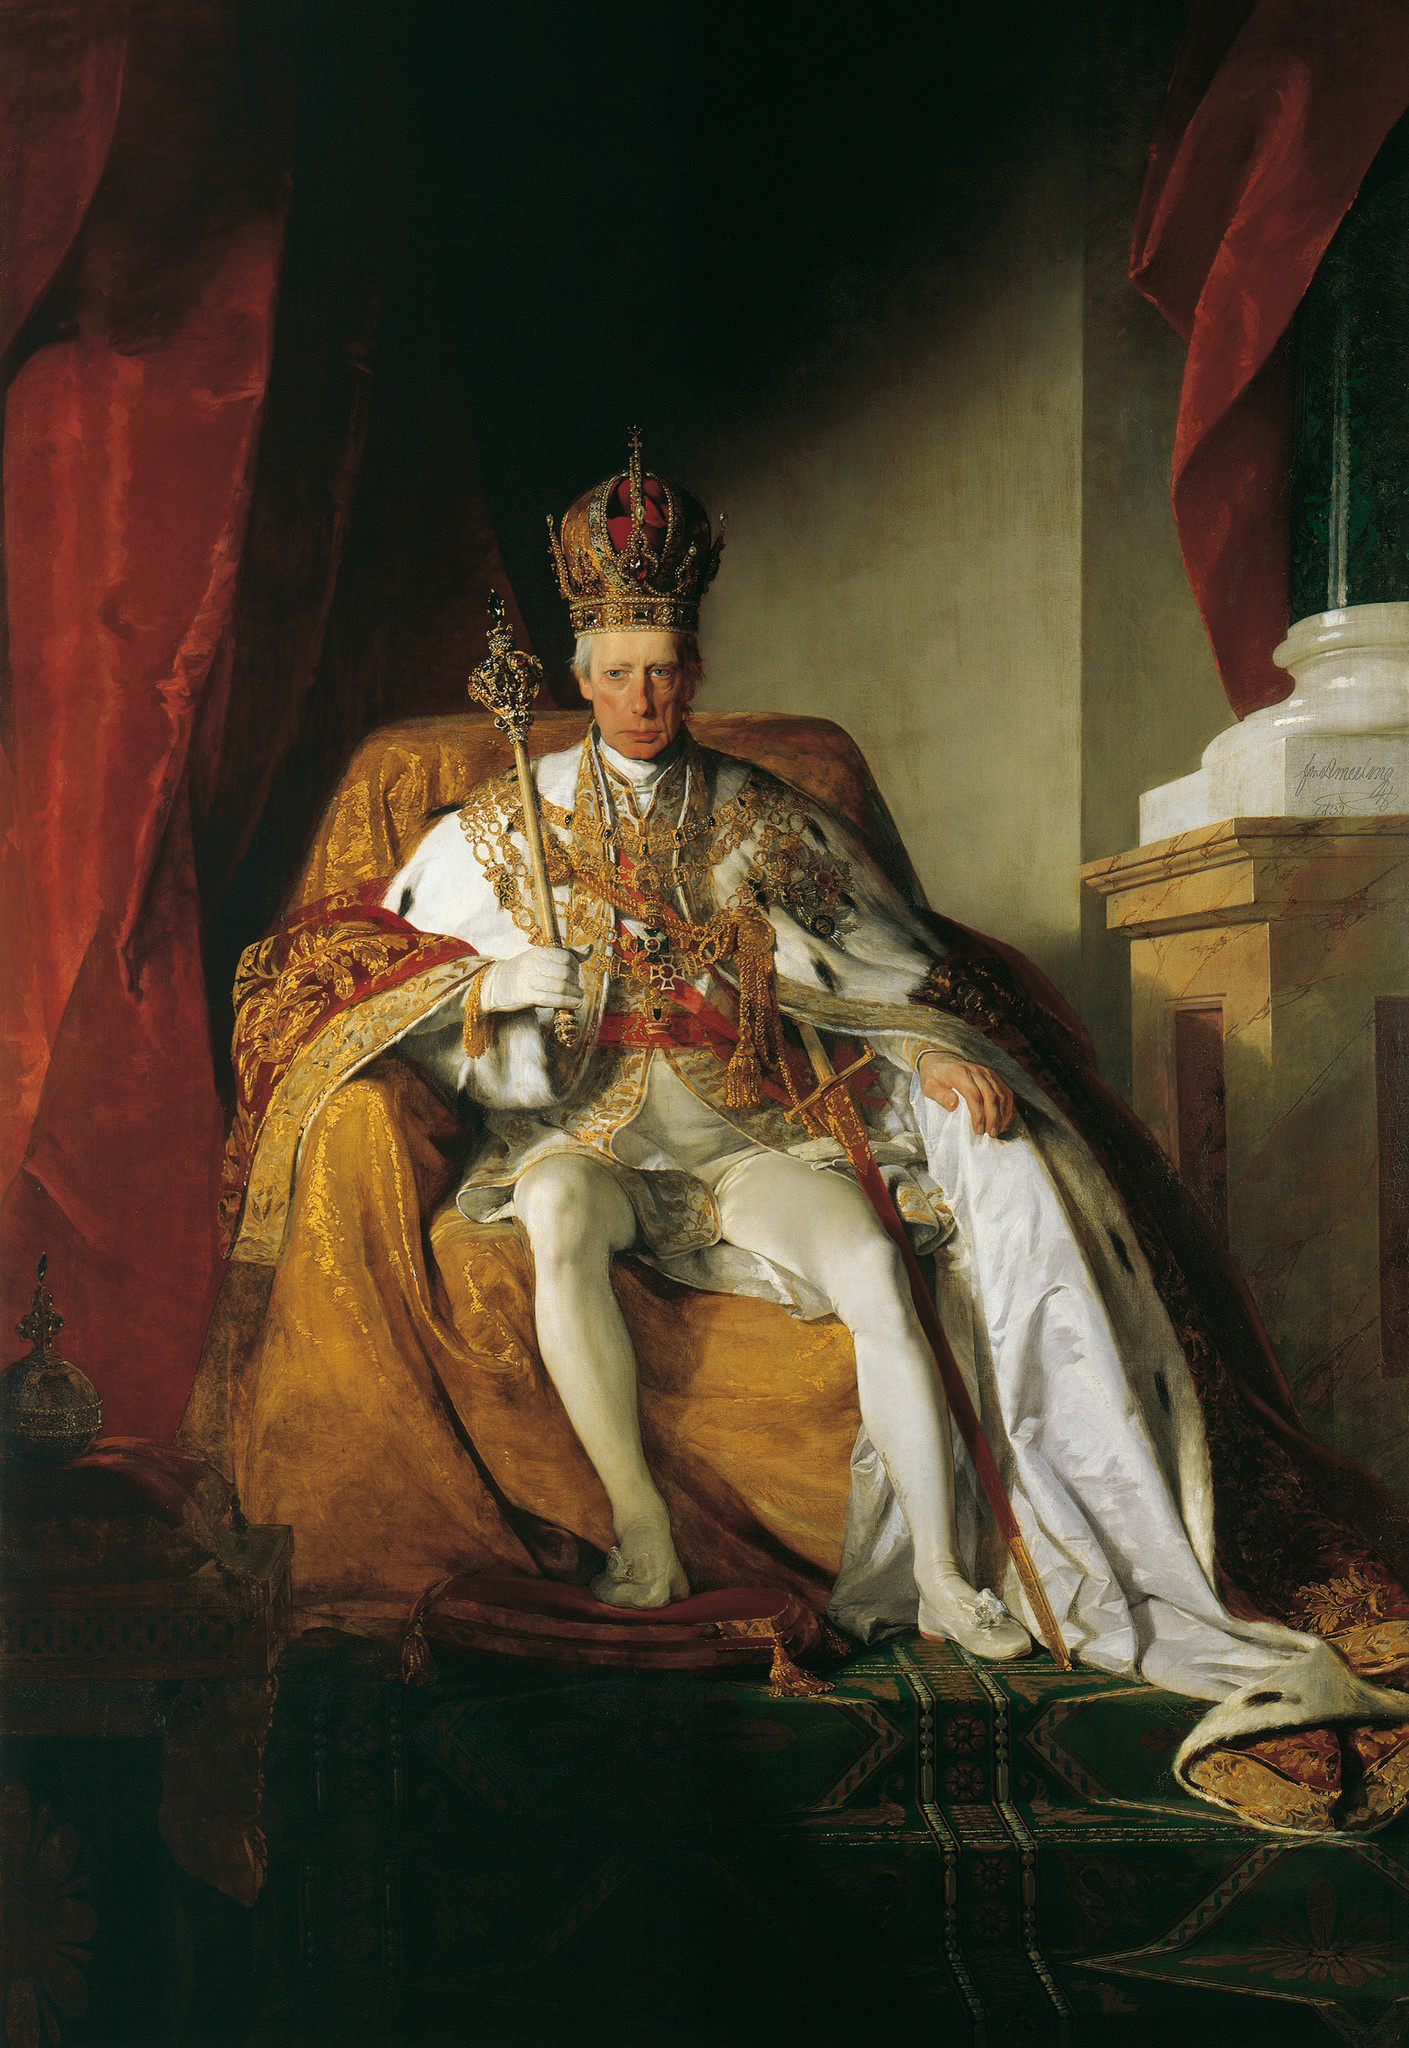 Francis II, the last Holy Roman Emperor, abdicates ending the Holy Roman Empire